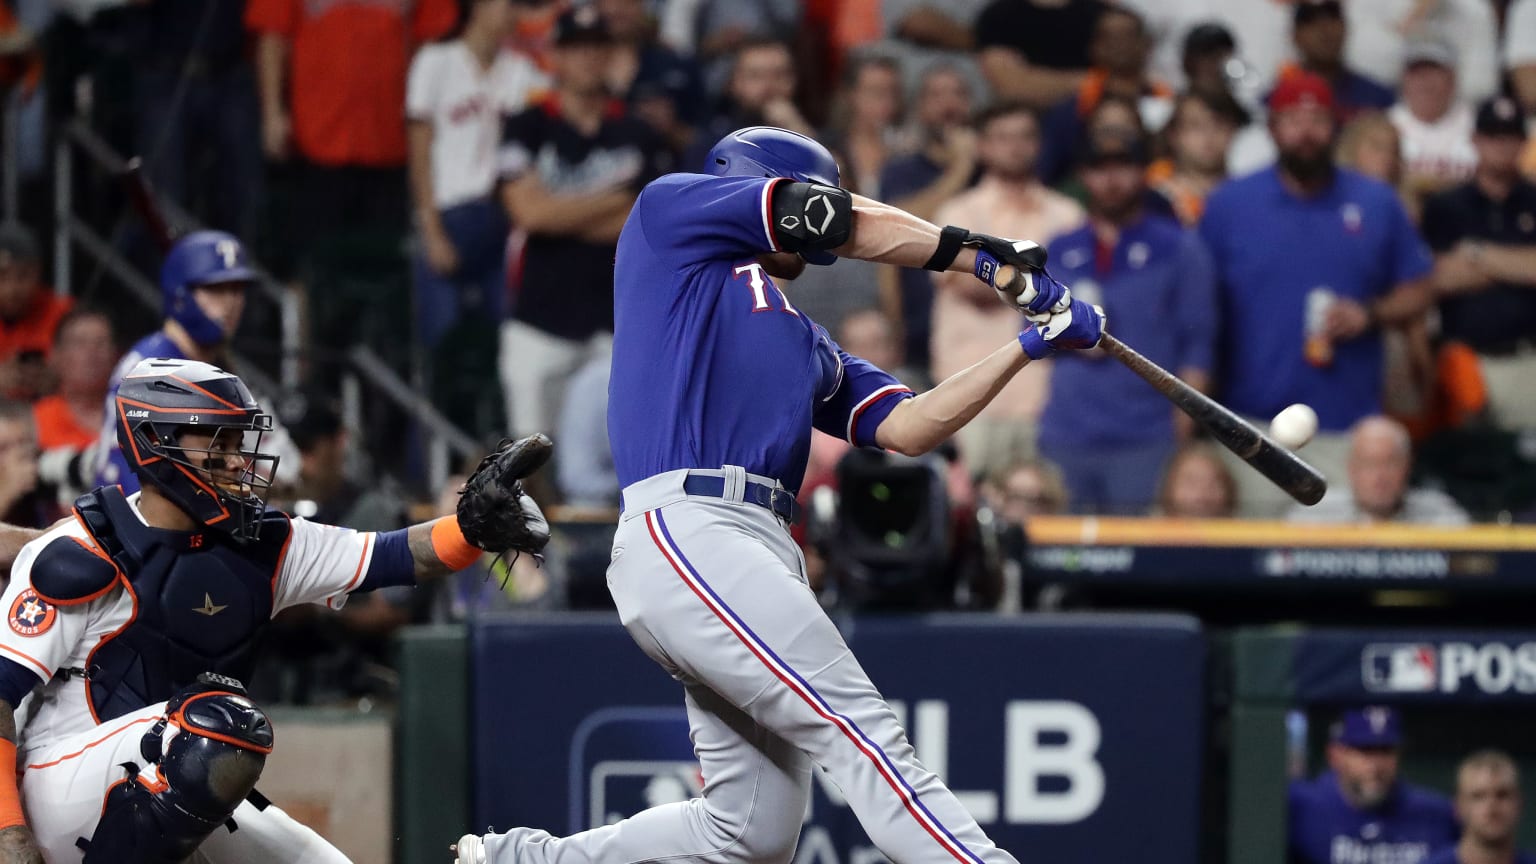 Corey Seager's World Series home run scream sent the internet into